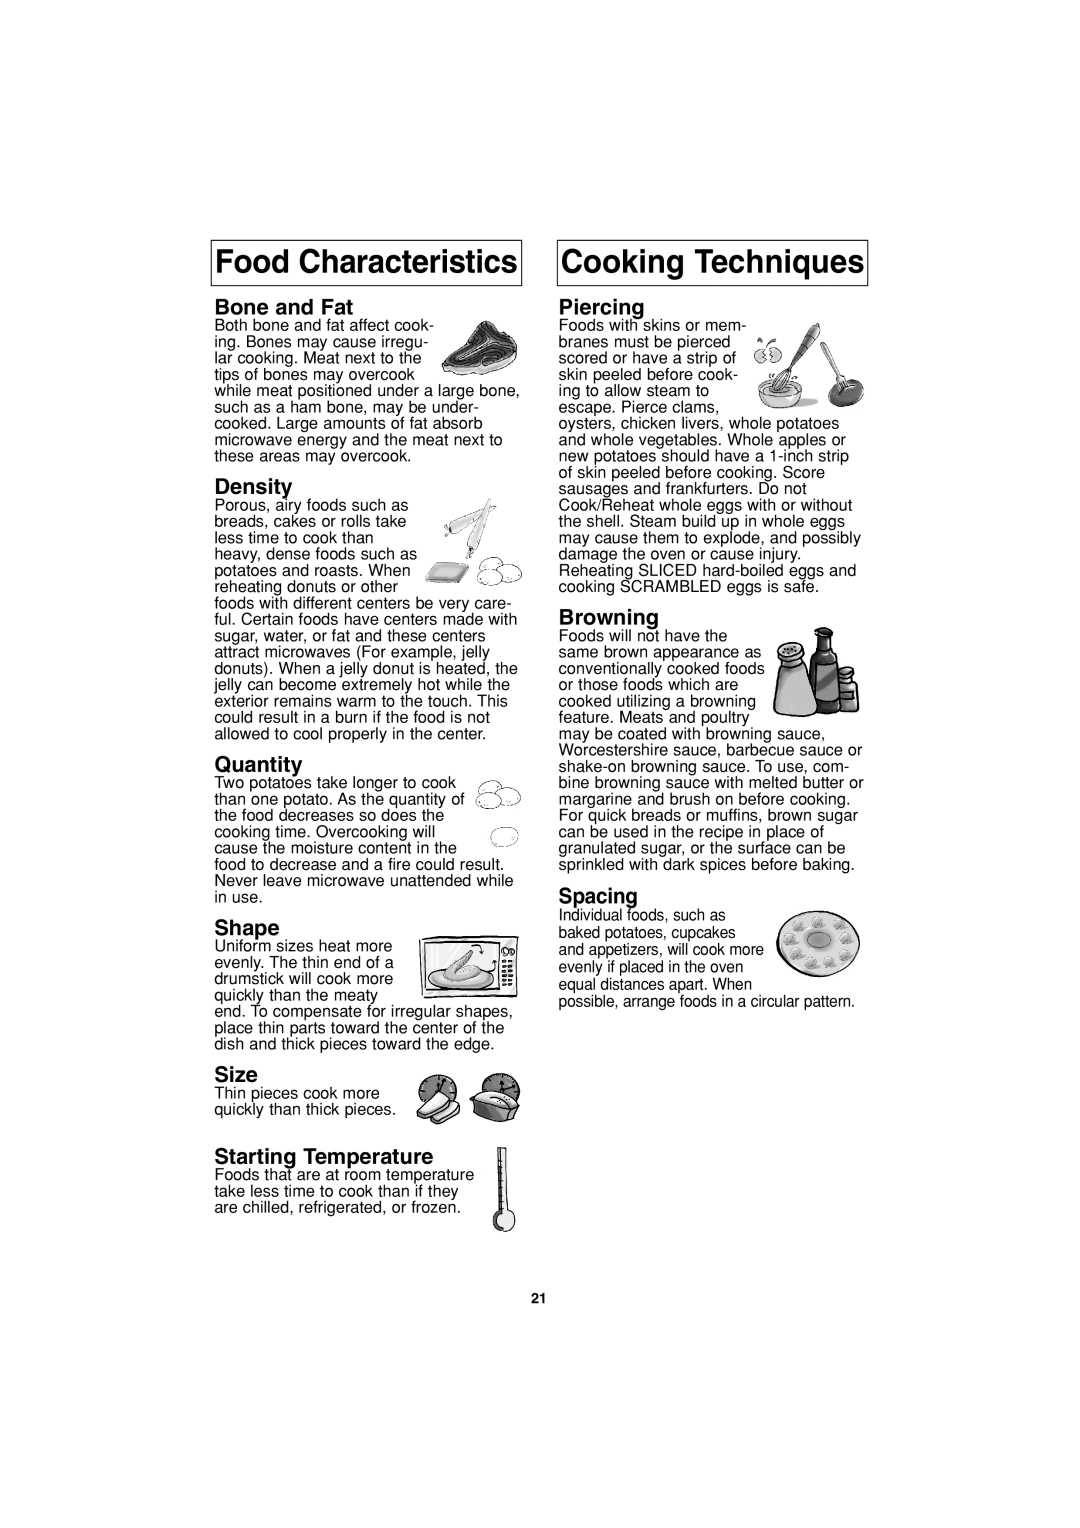 Panasonic NN-S443 Food Characteristics, Cooking Techniques, Bone and Fat, Density, Quantity, Shape, Size, Piercing 